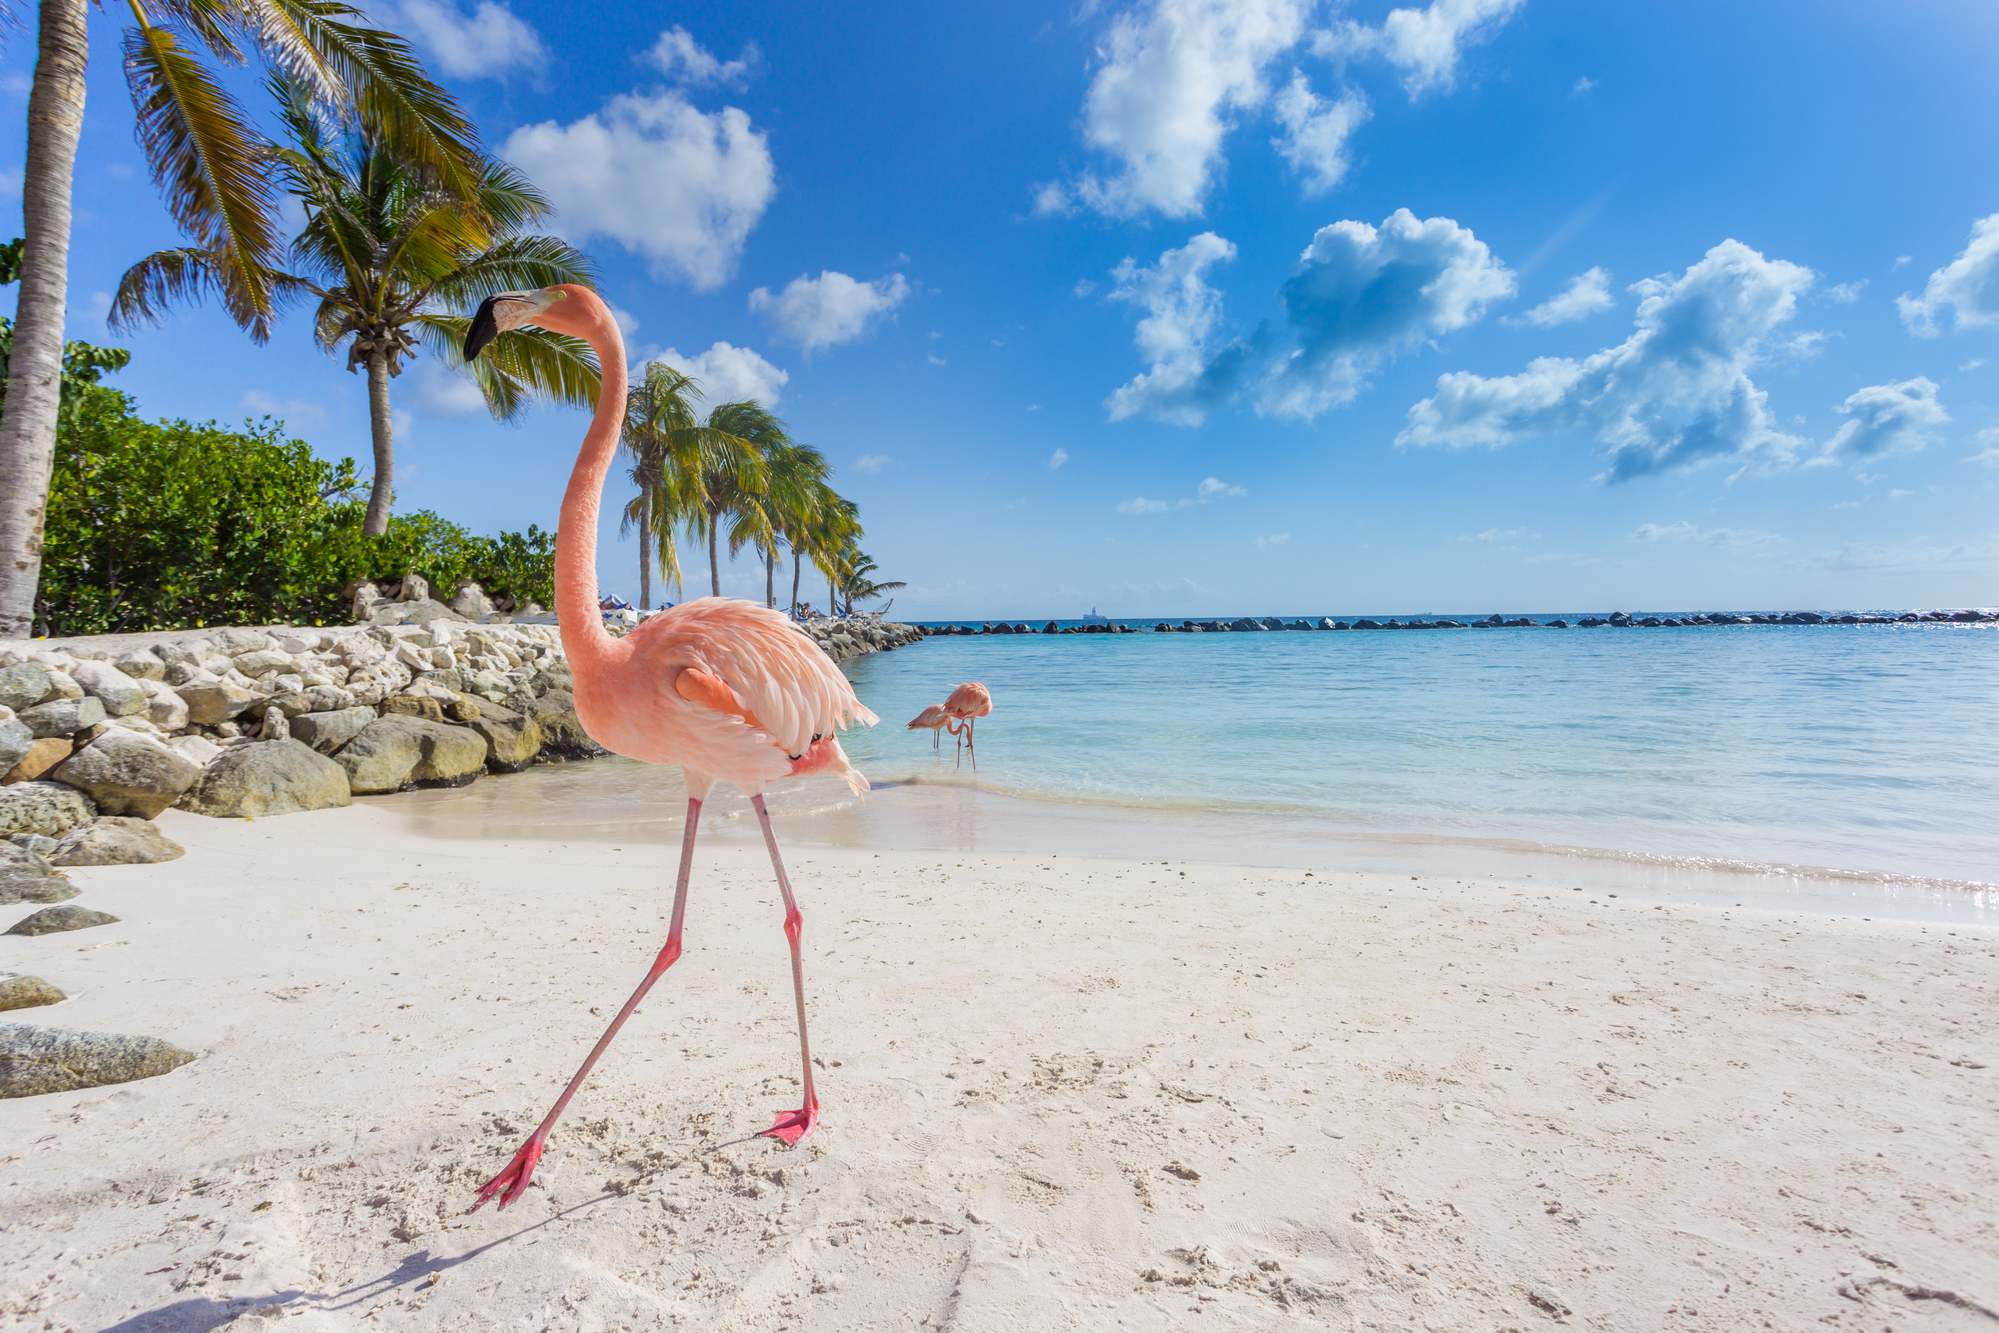 Three flamingos on the beach